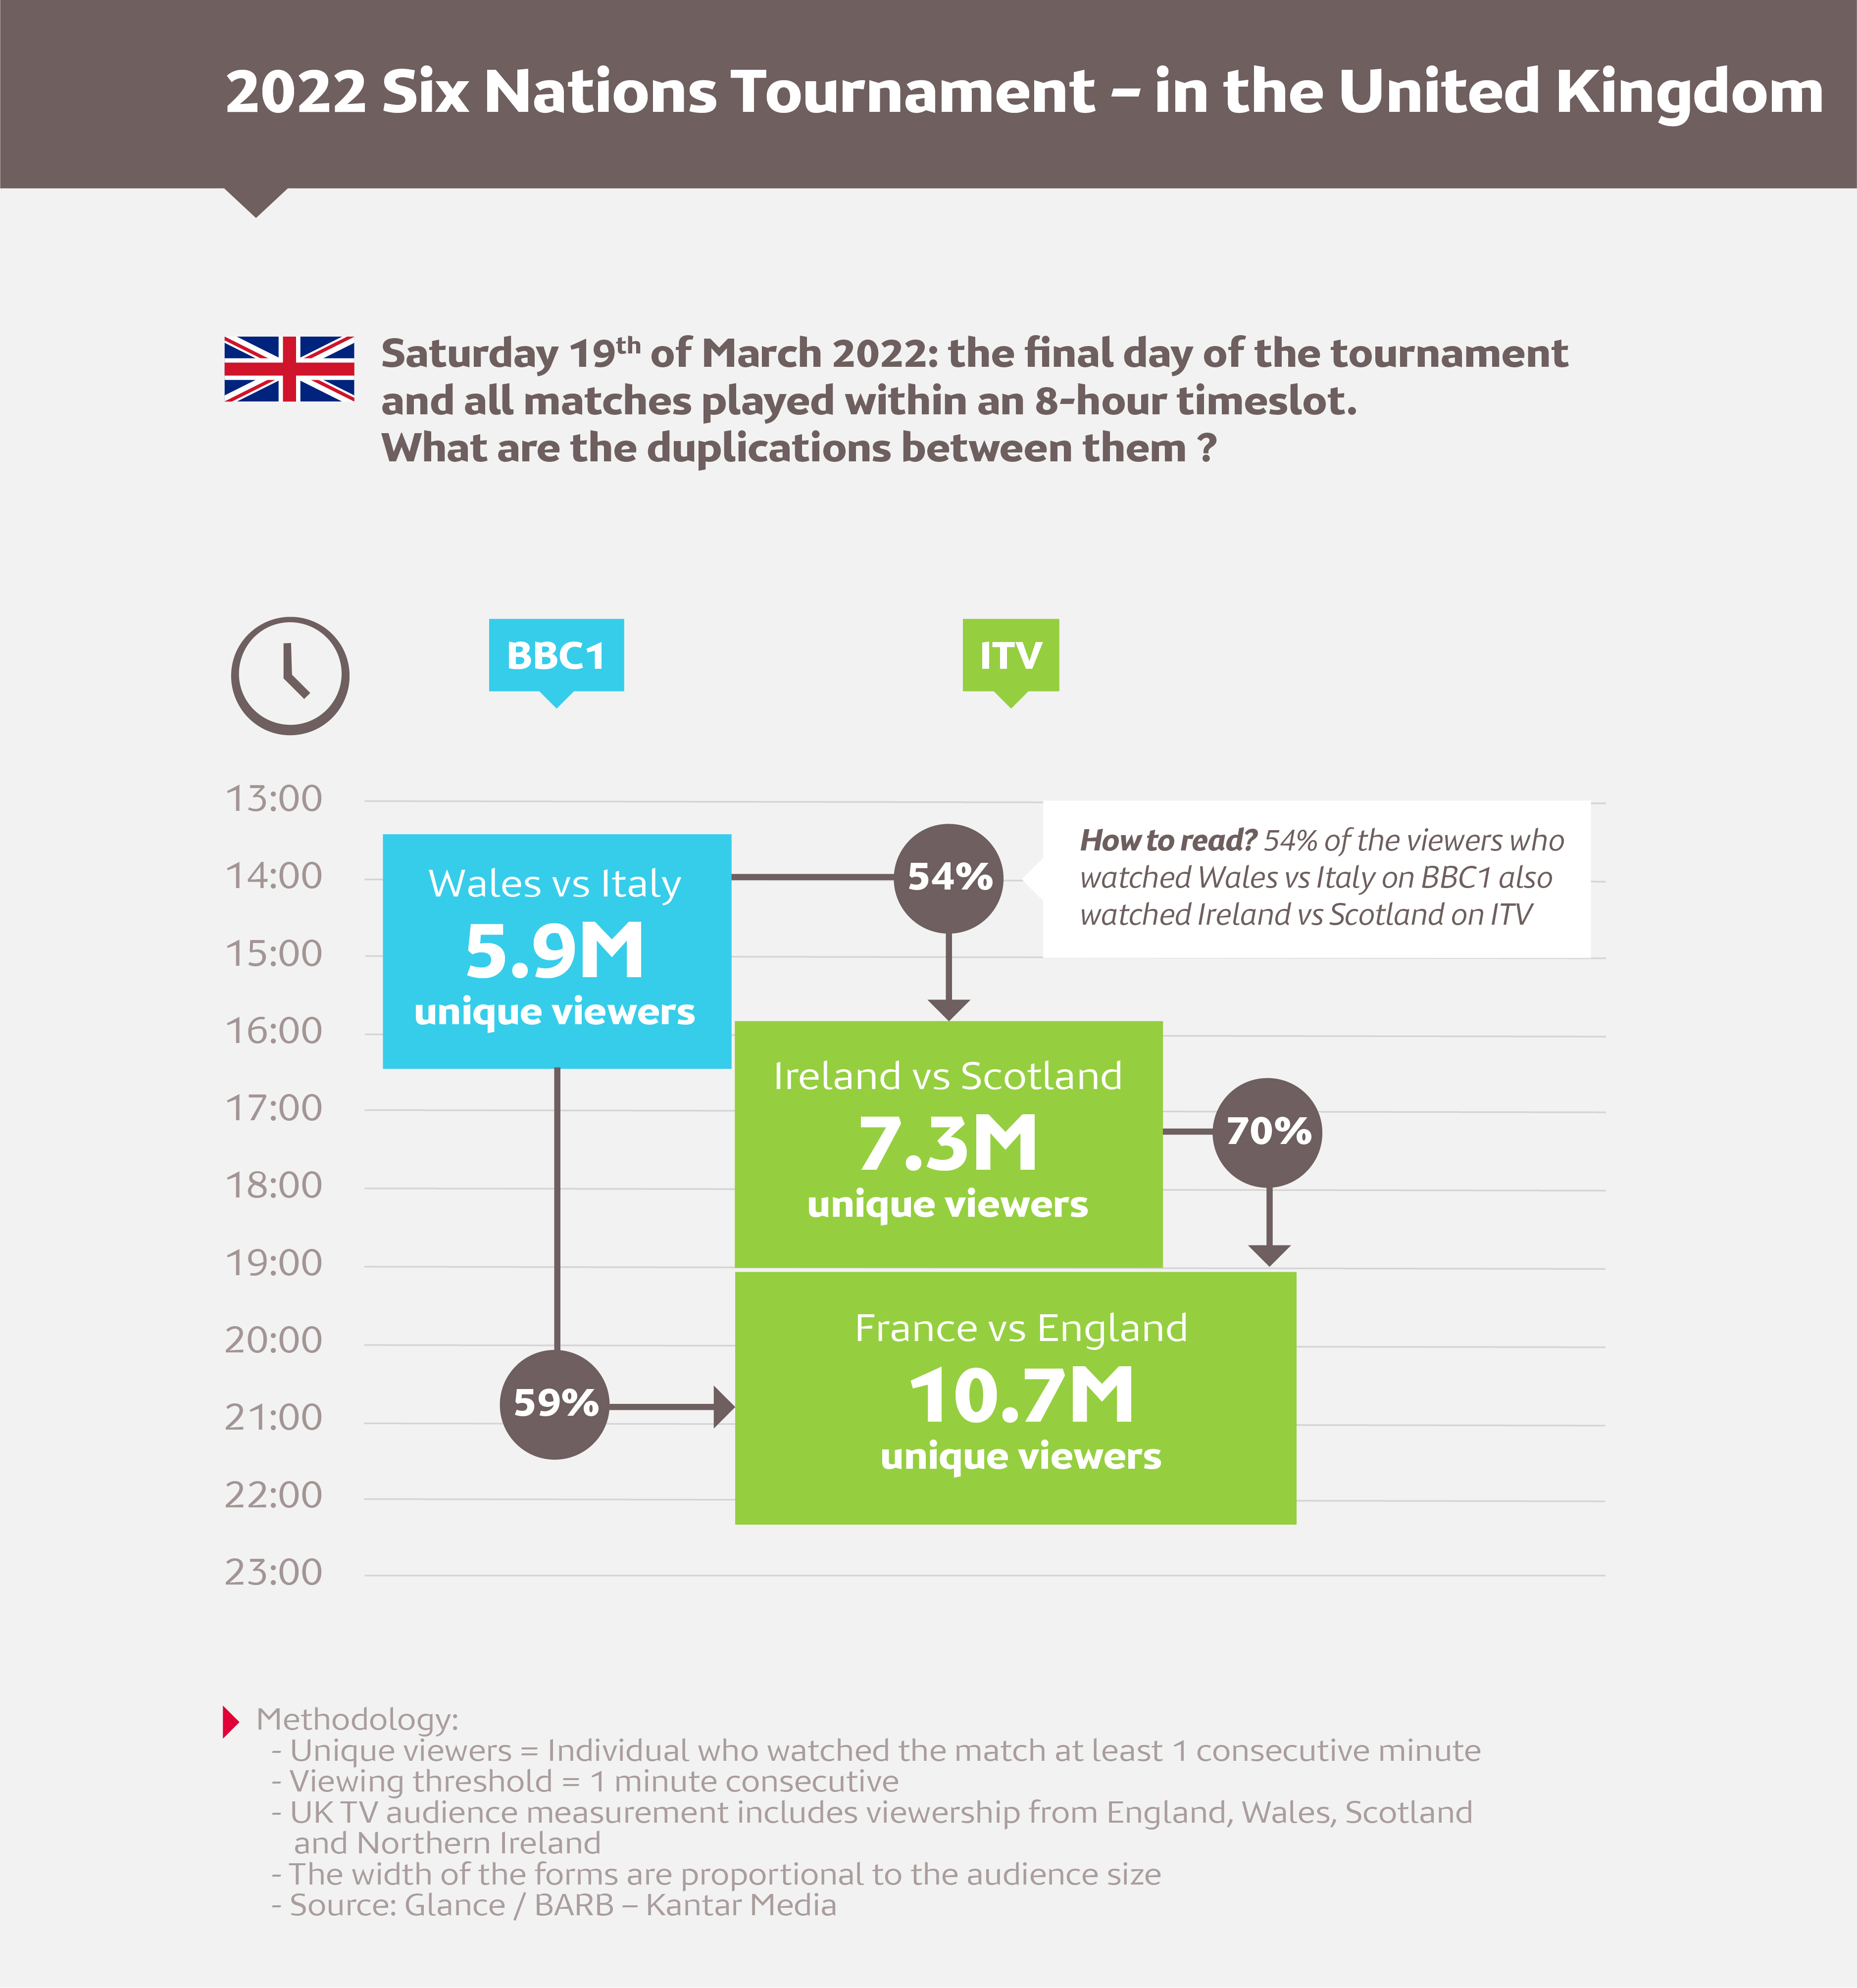 MSI April 2022 - Six Nations Tournament UK